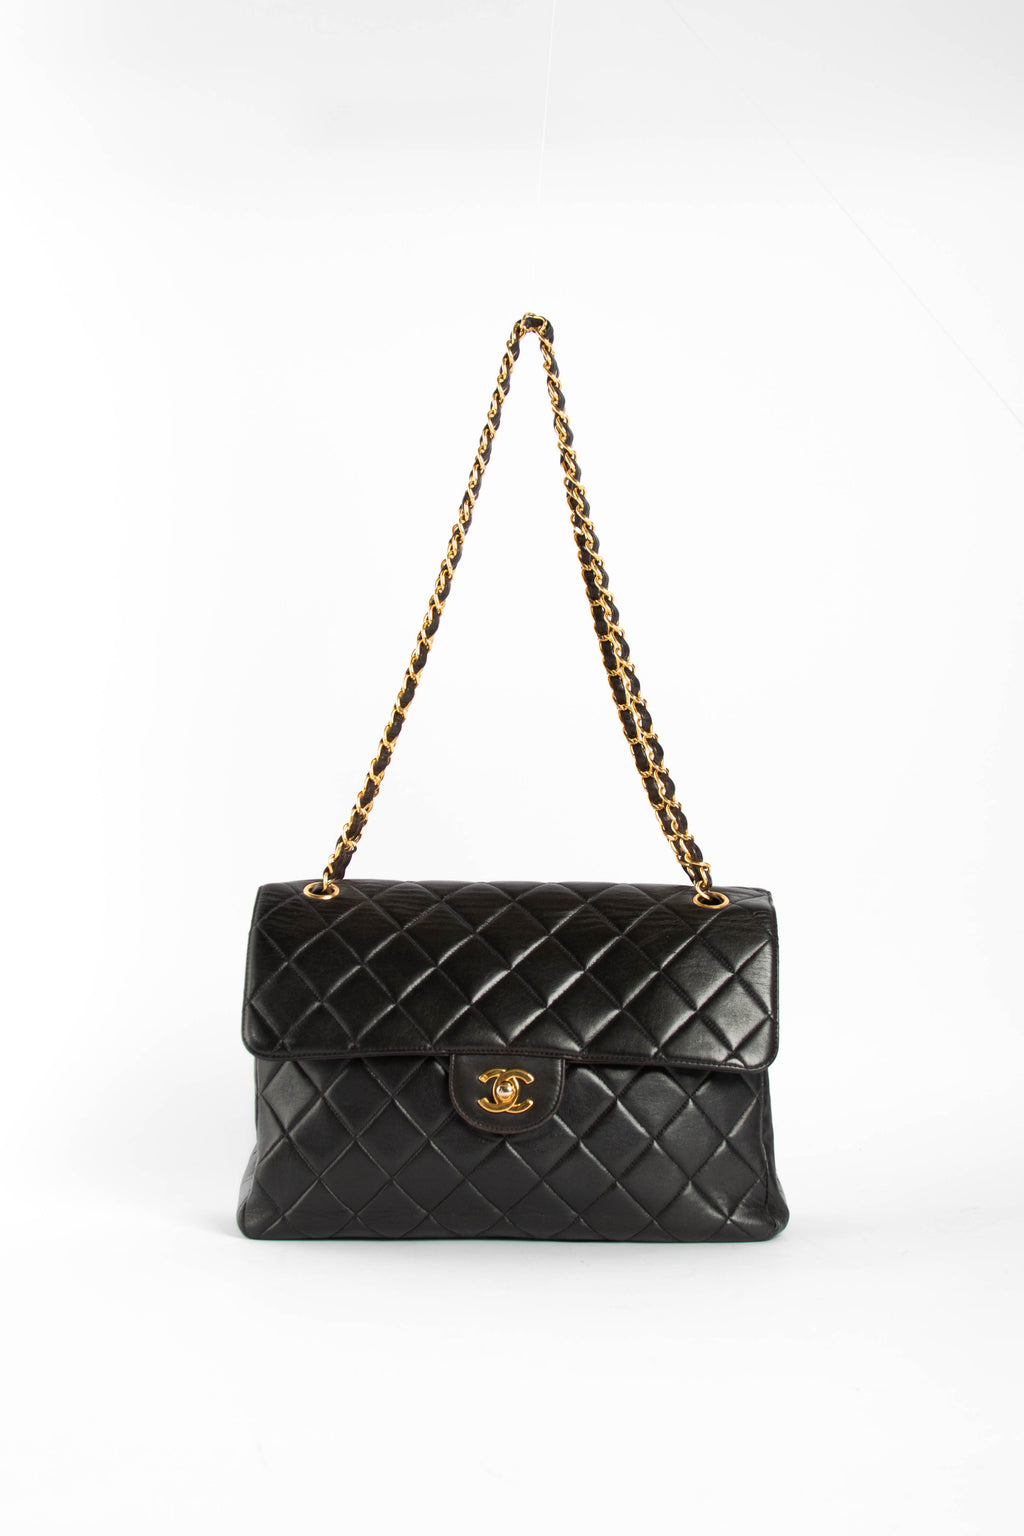 90s Chanel Black Double Faced Shoulder Bag with 24k GHW